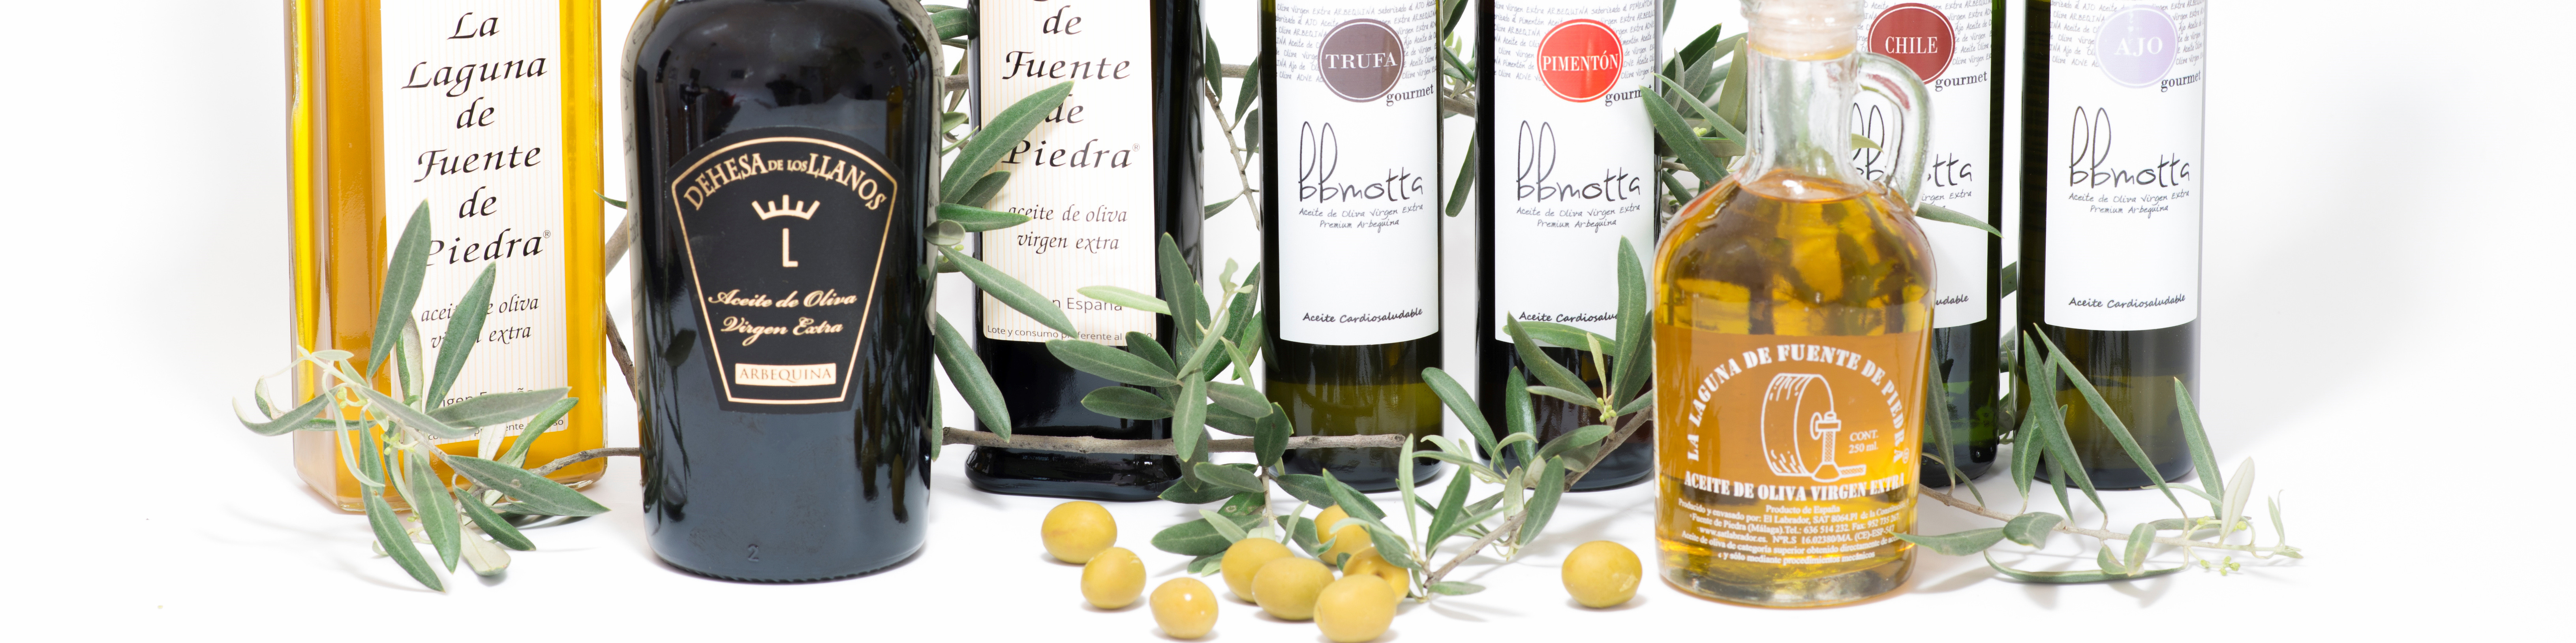  Spanish olive oils